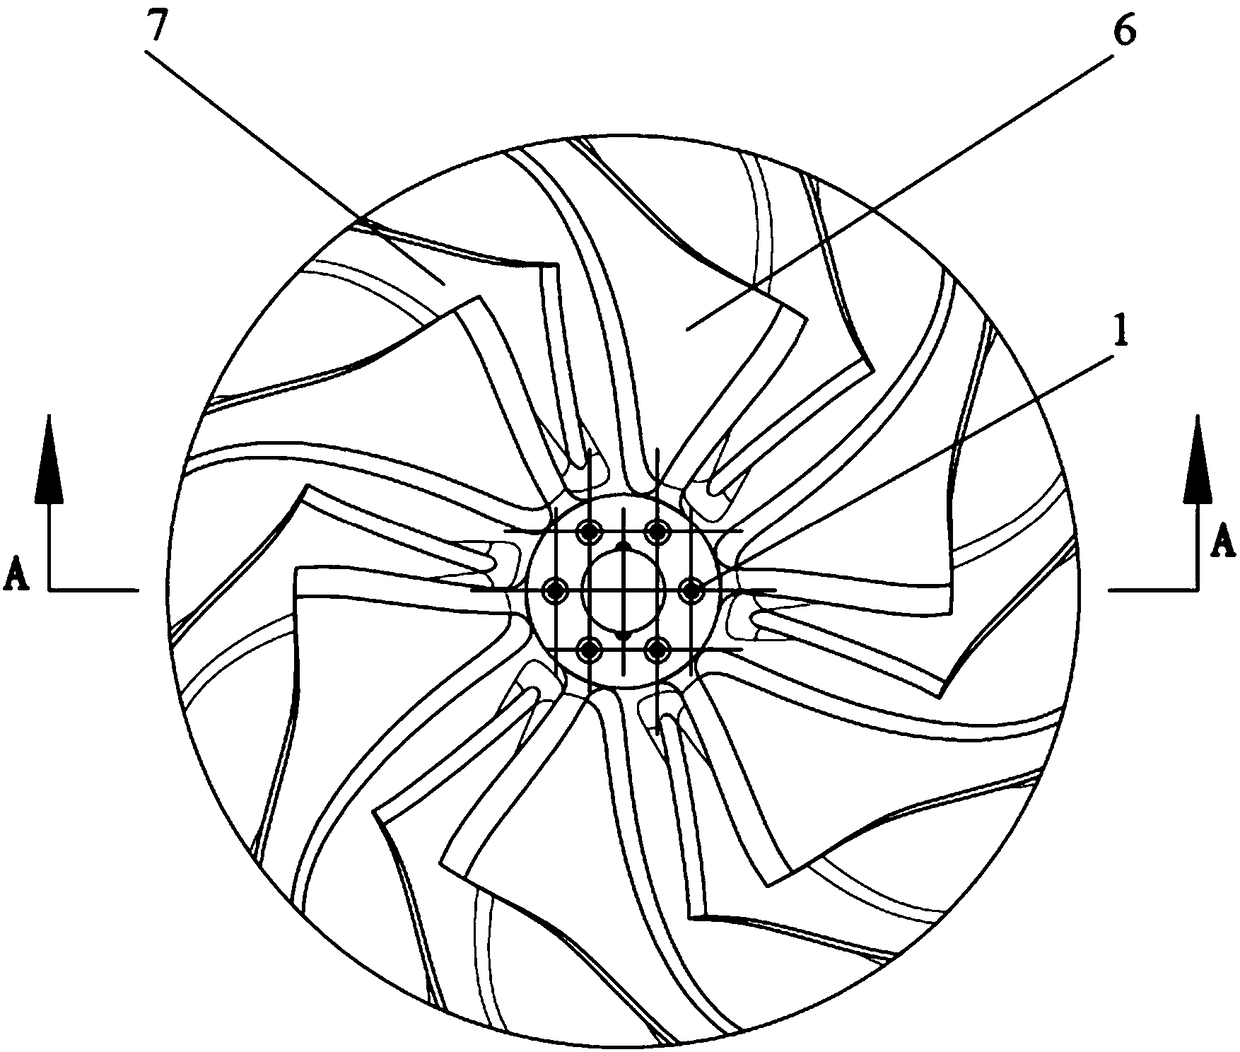 Wheel disc and air compressor comprising same